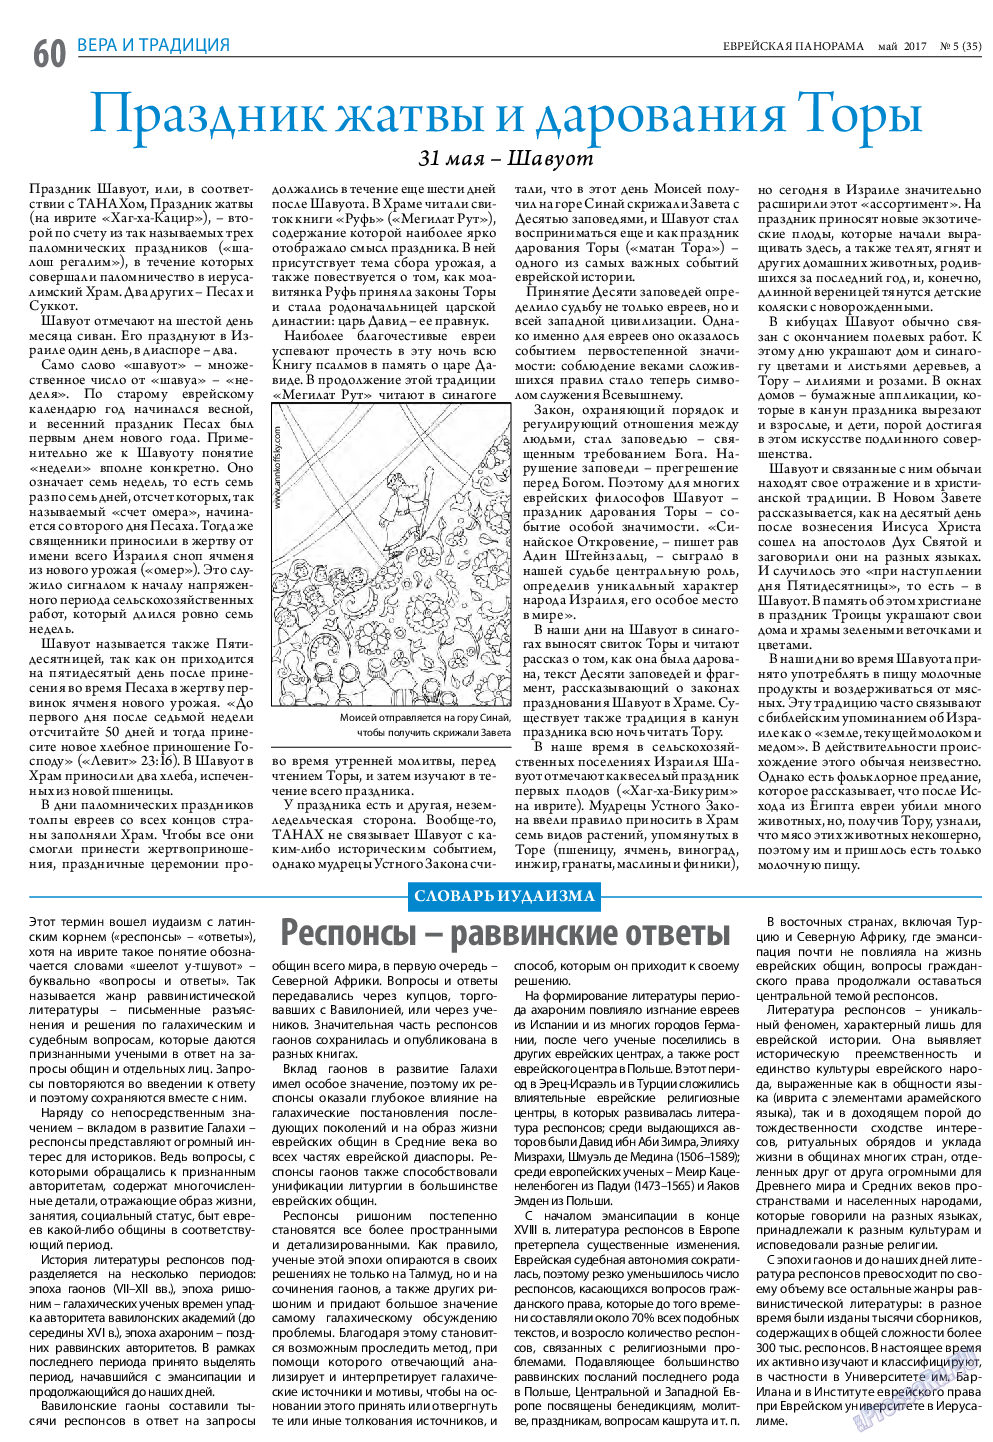 Еврейская панорама, газета. 2017 №5 стр.60